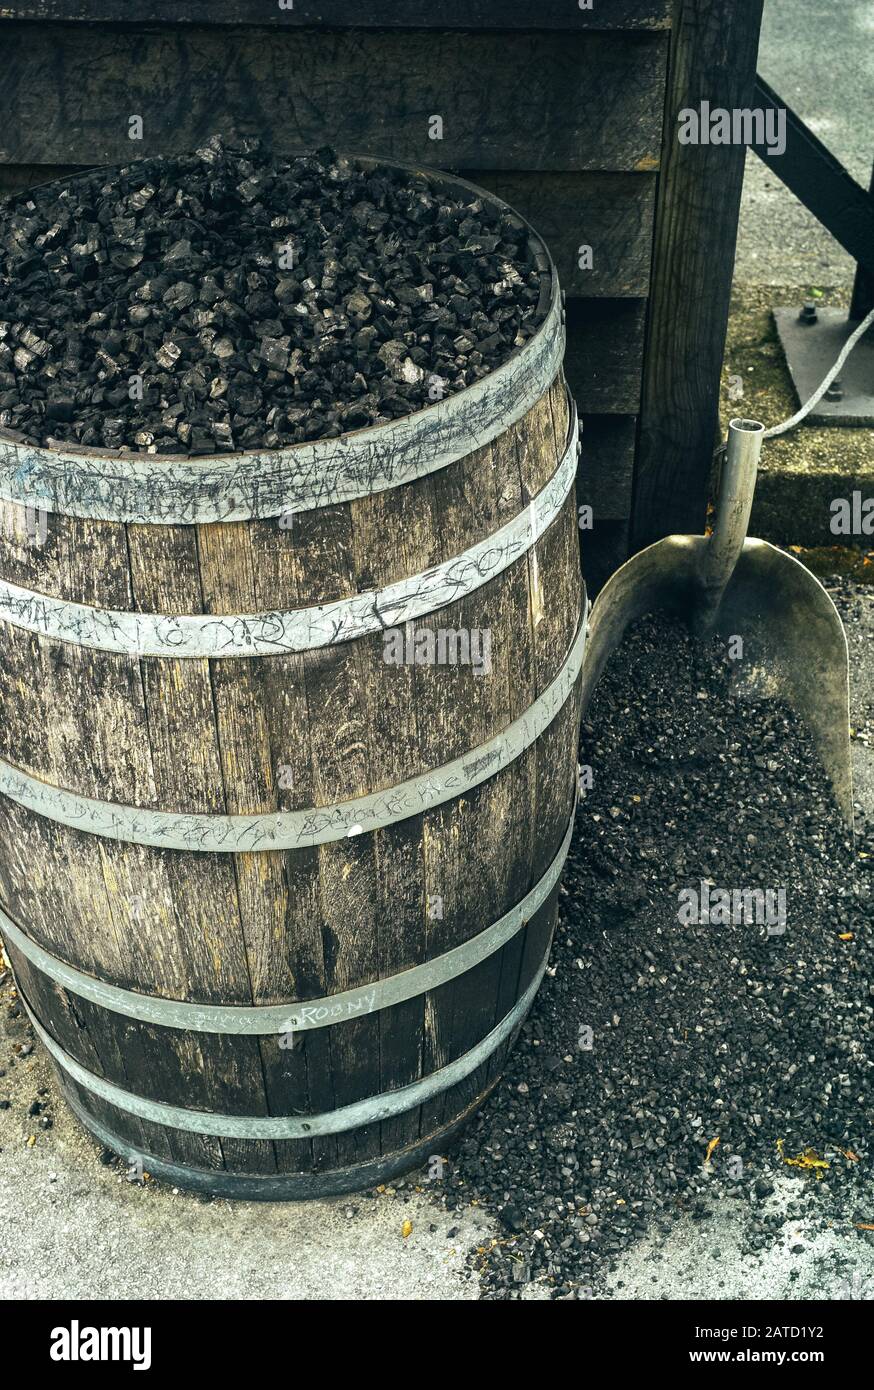 Carbón de leña en un barril y un Shovel, utilizado para Mellowing Tennessee Whiskey by Filtration Foto de stock